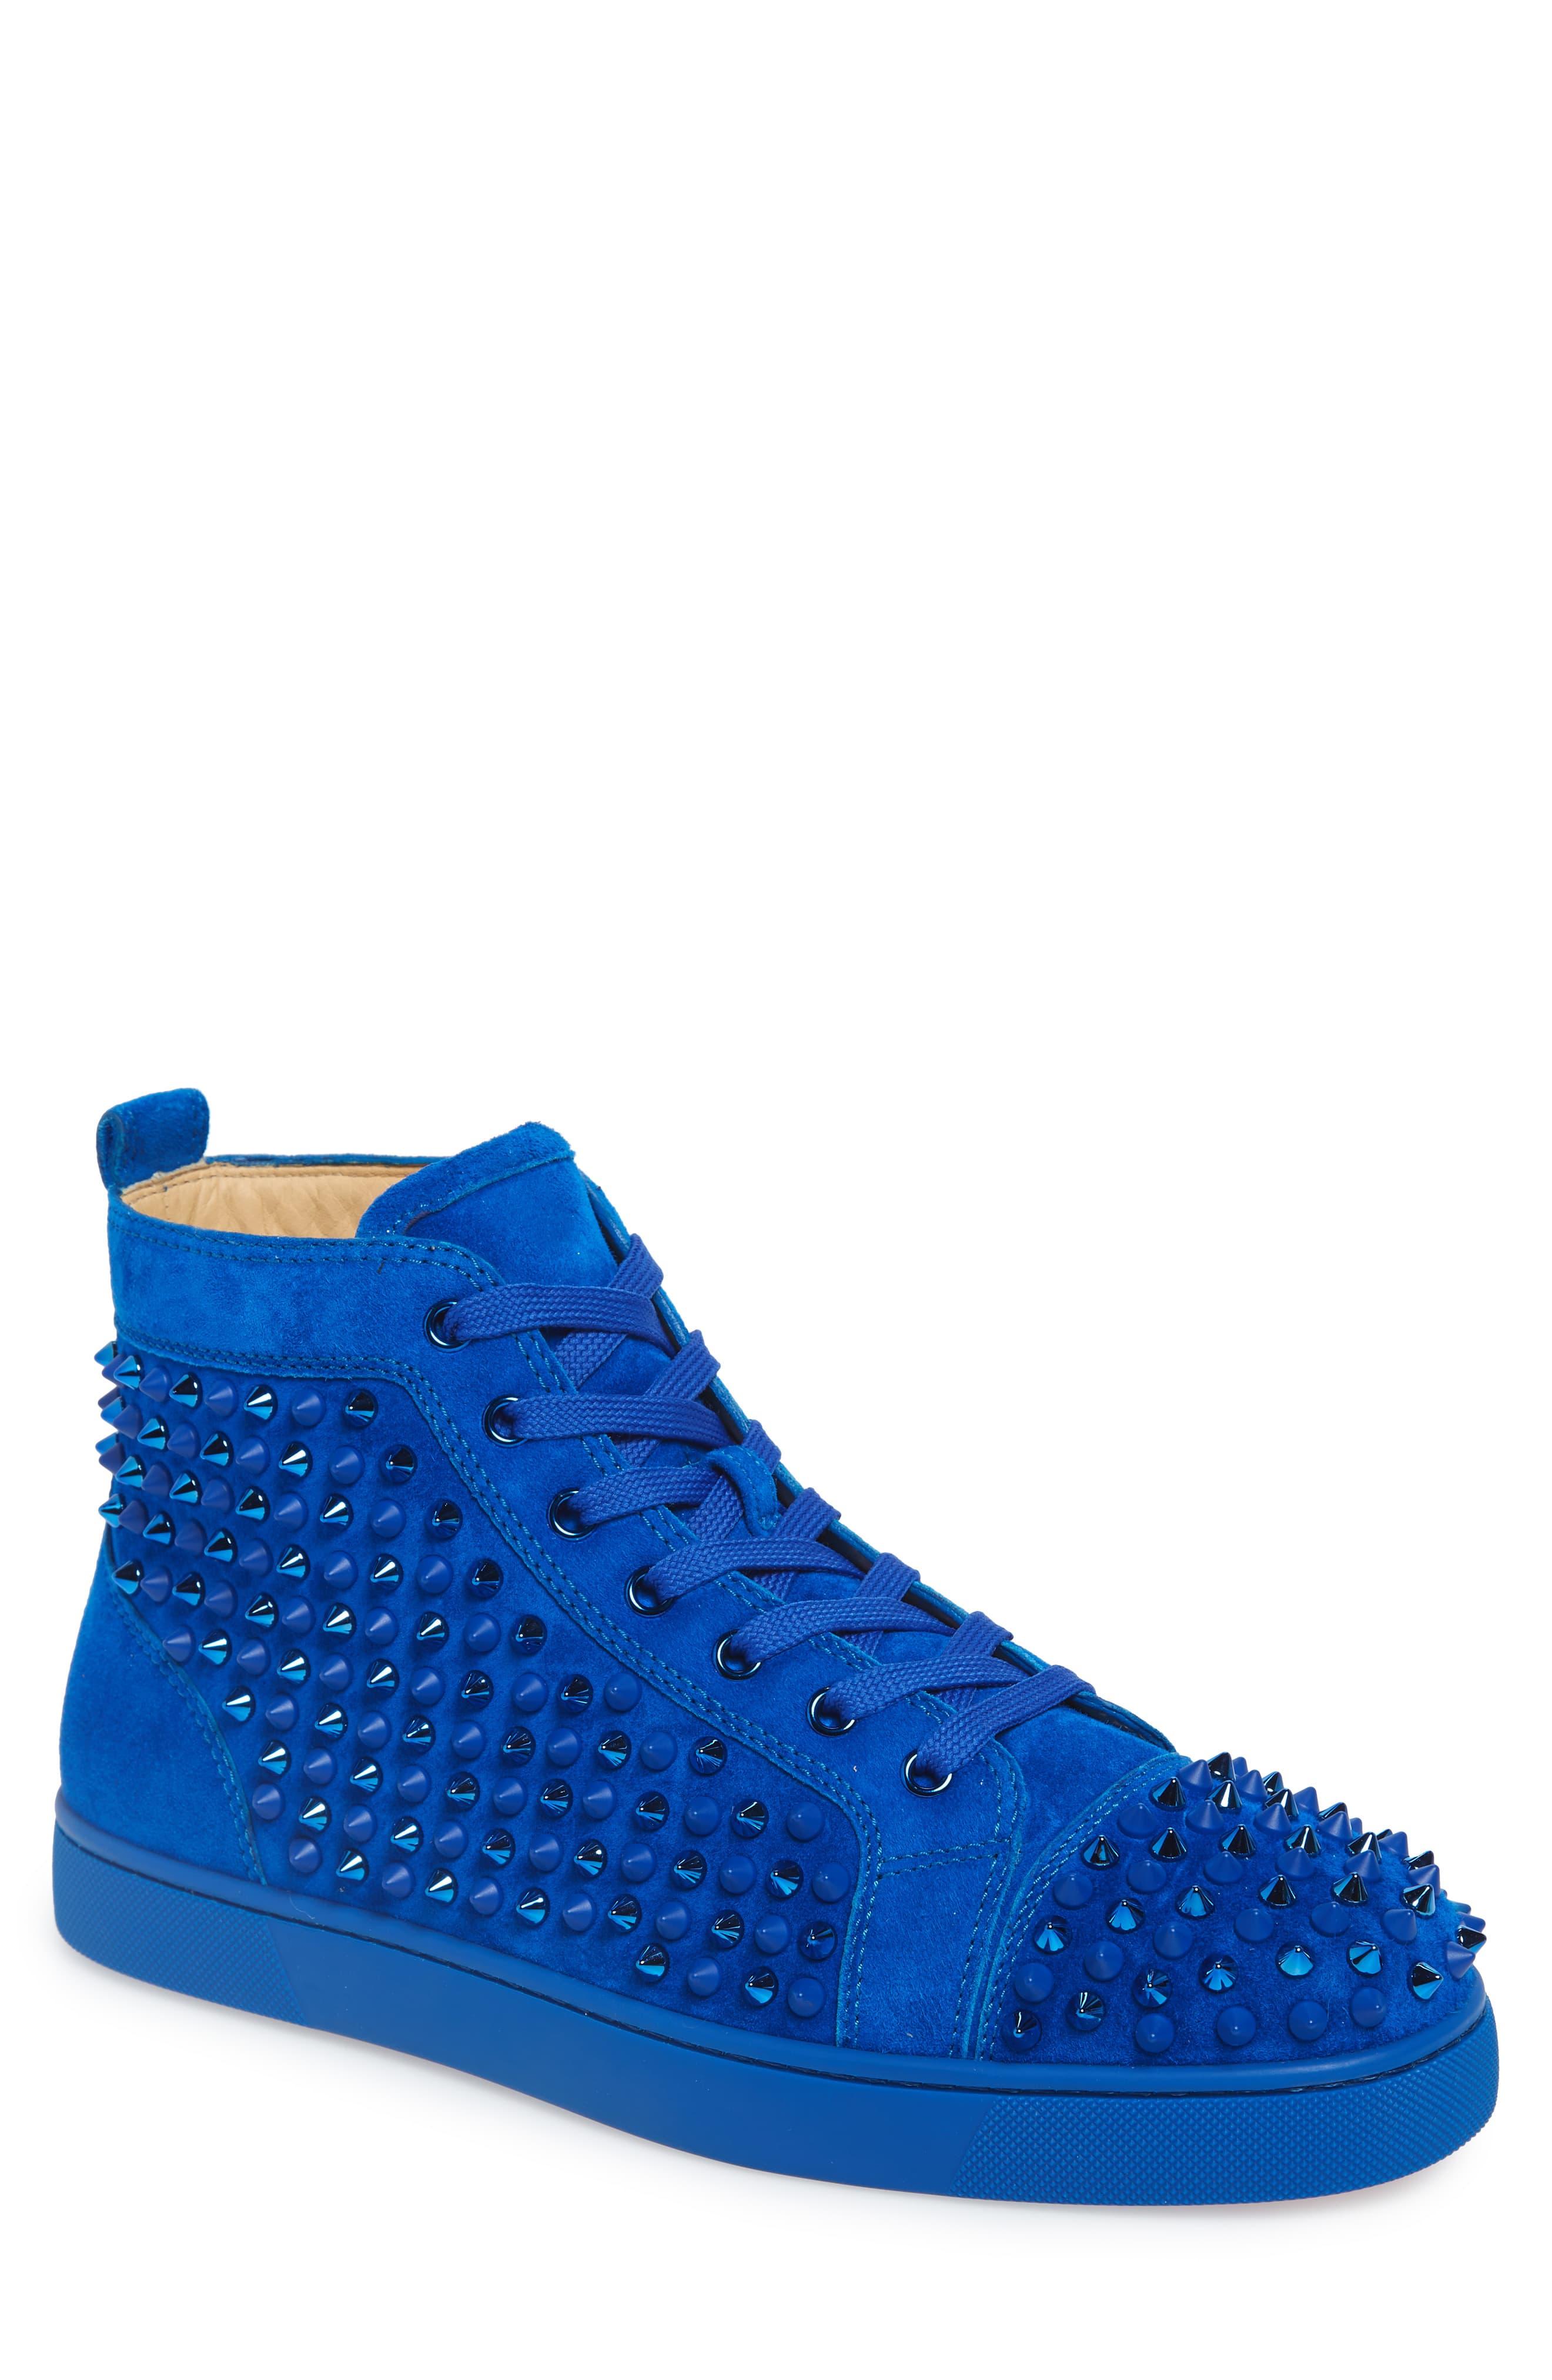 christian louboutin blue sneakers